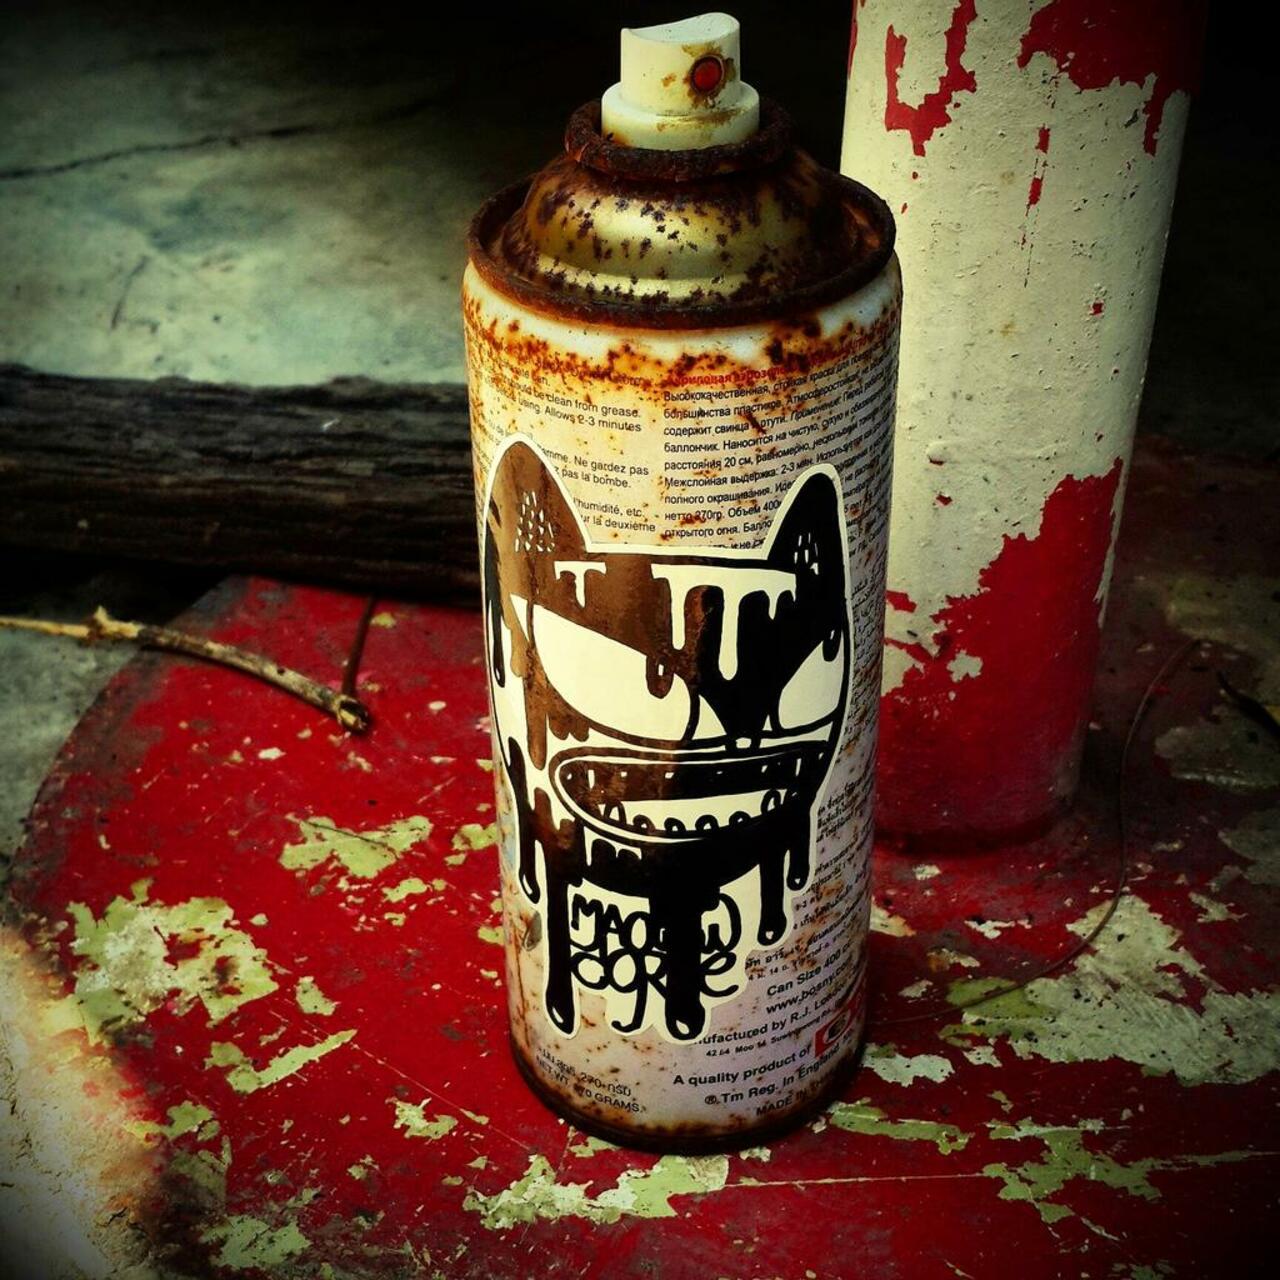 Old Spray by maowcore #streetart #graffiti #maowcore #marker #sticker #handmade #art #design #tags #thailand #spray http://t.co/6G6JZshcwG